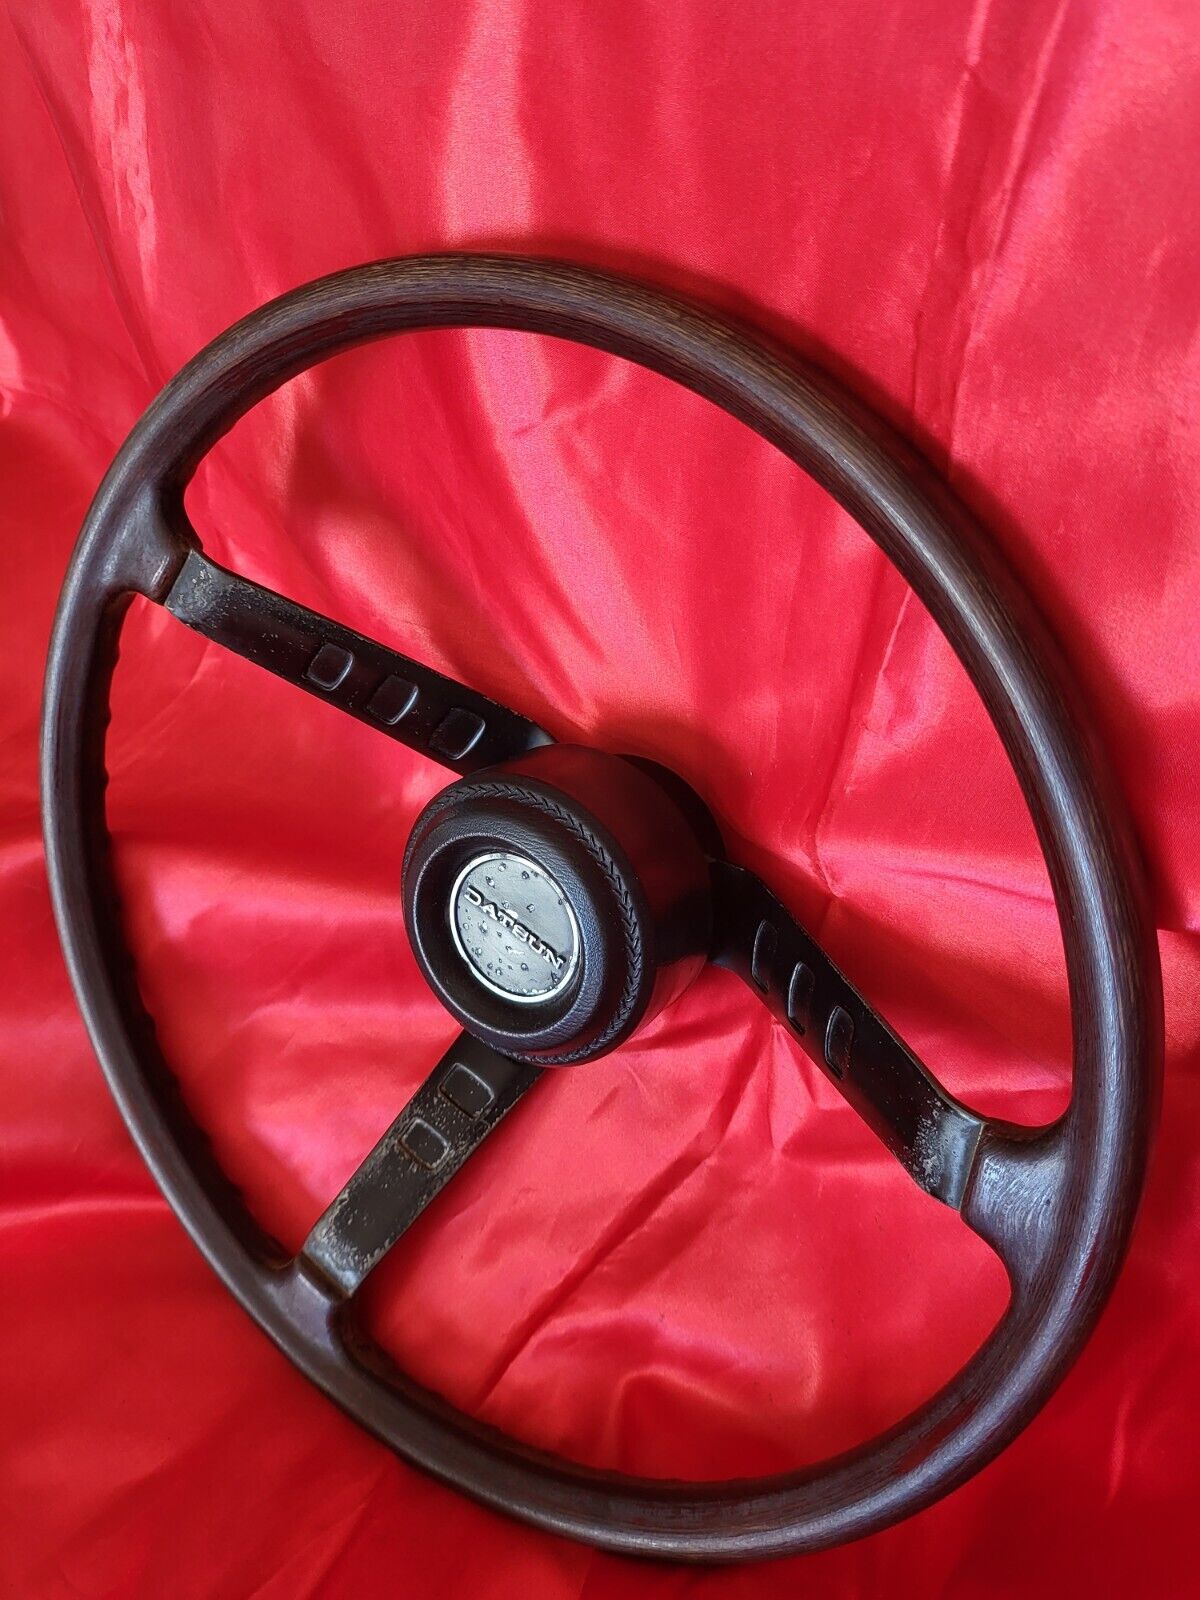 Datsun 240z Steering Wheel Series One Oem